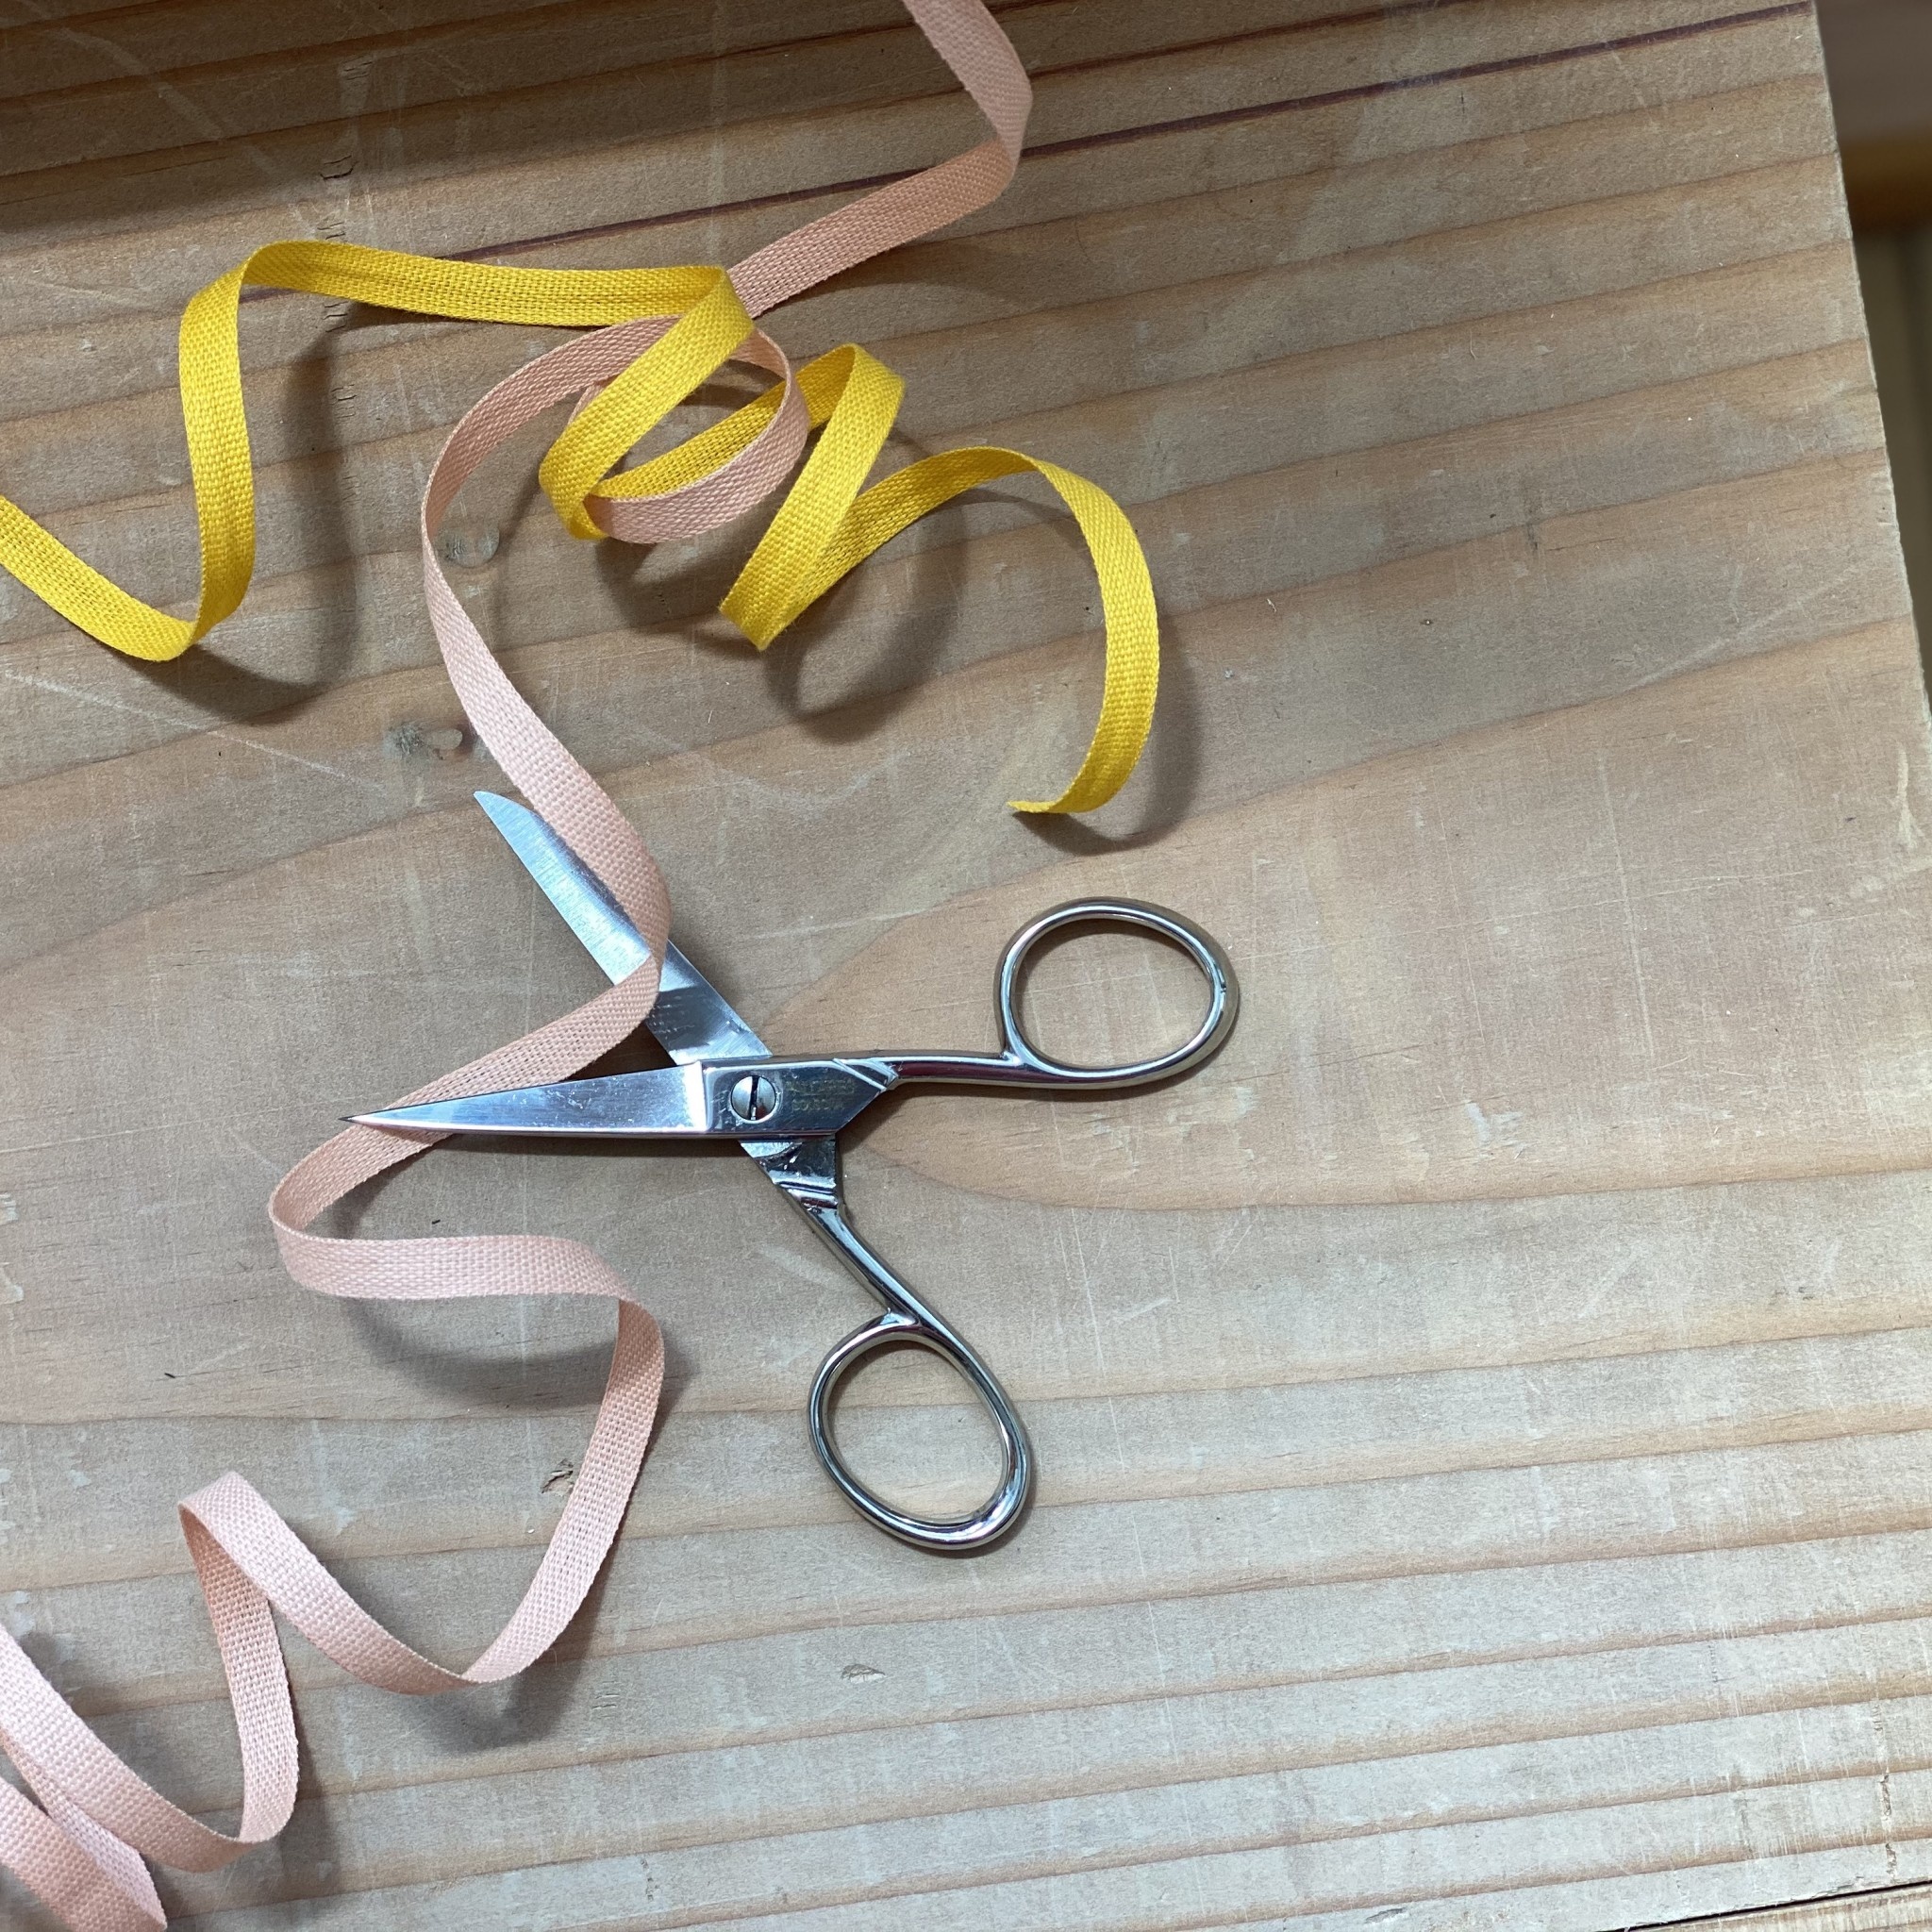 Pallares Knives Pallares Catalan Sewing Scissors - 4"